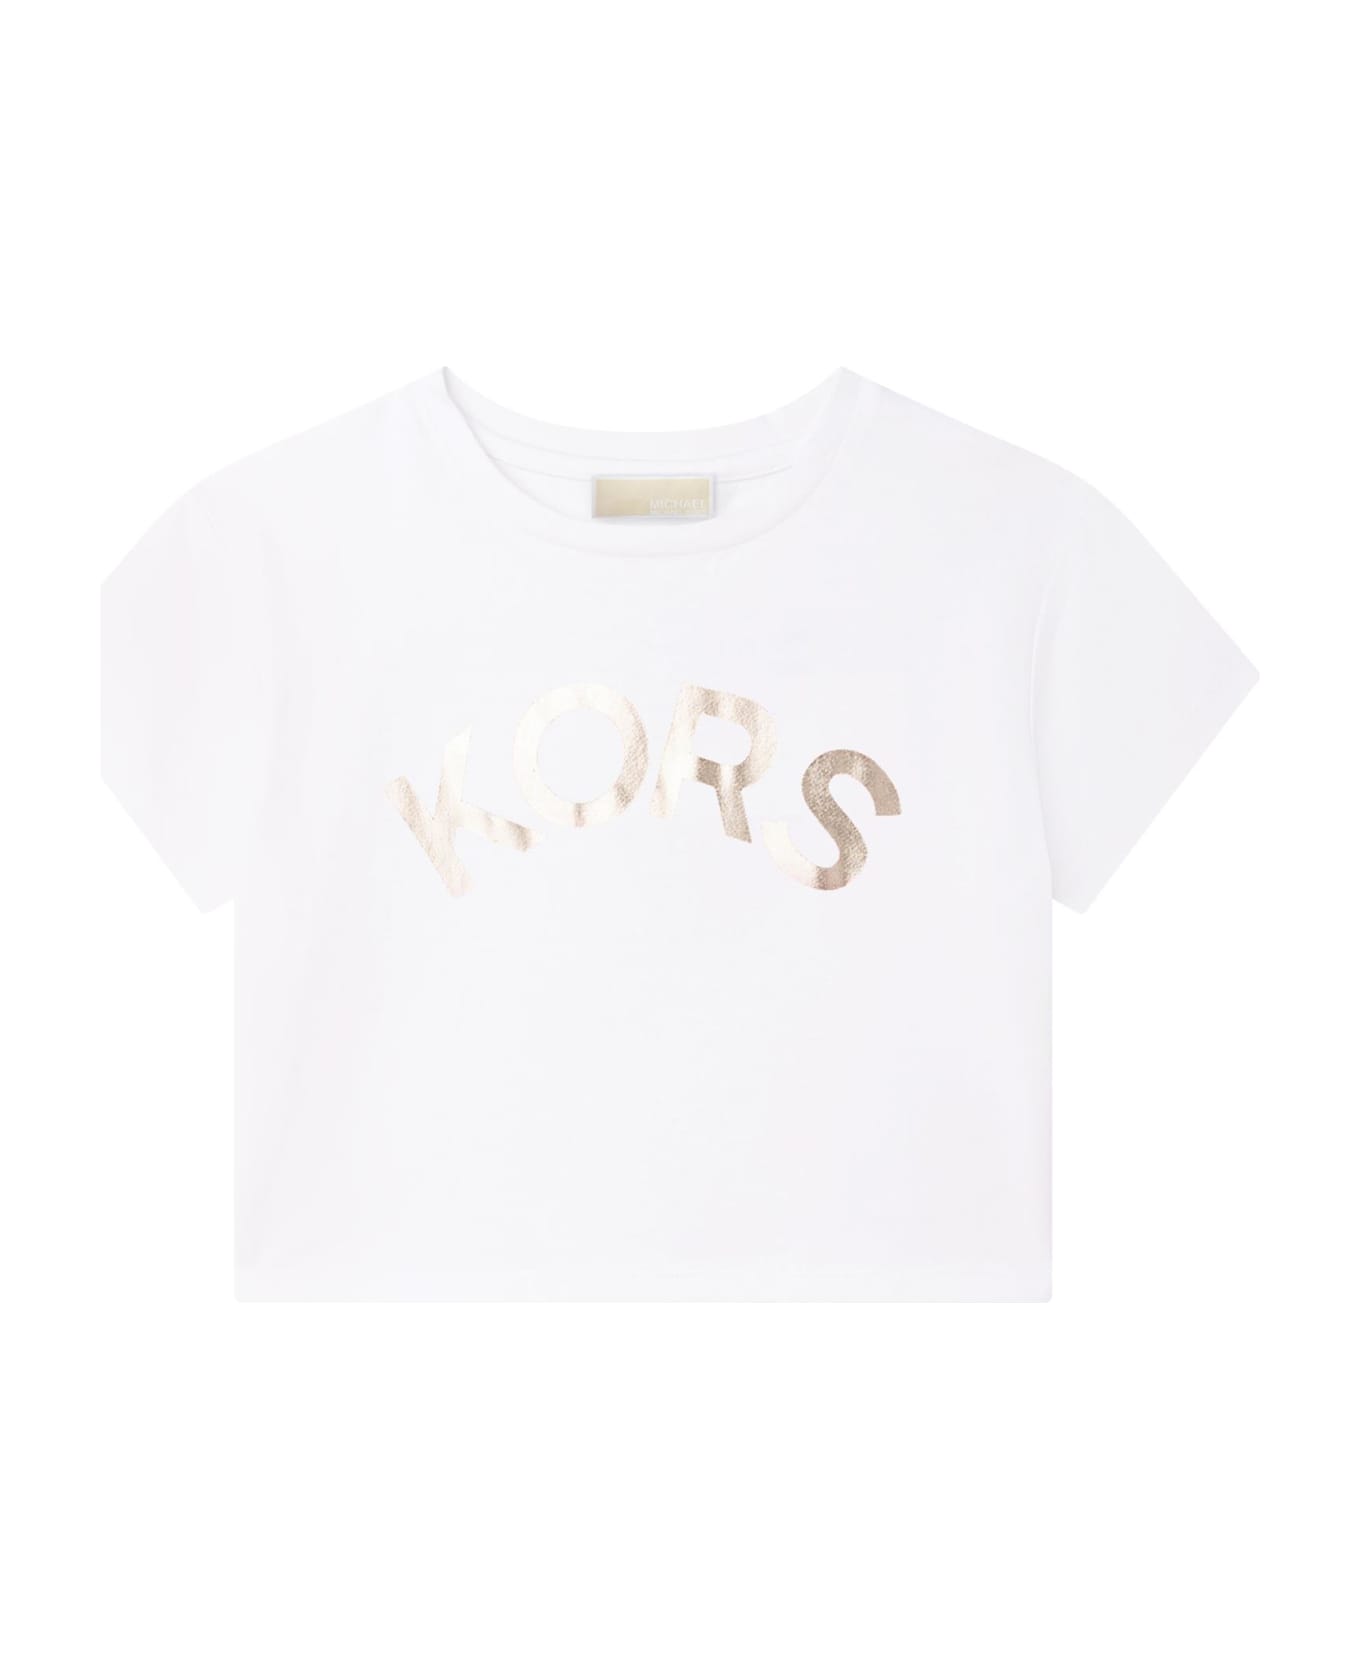 Michael Kors Printed T-shirt - White